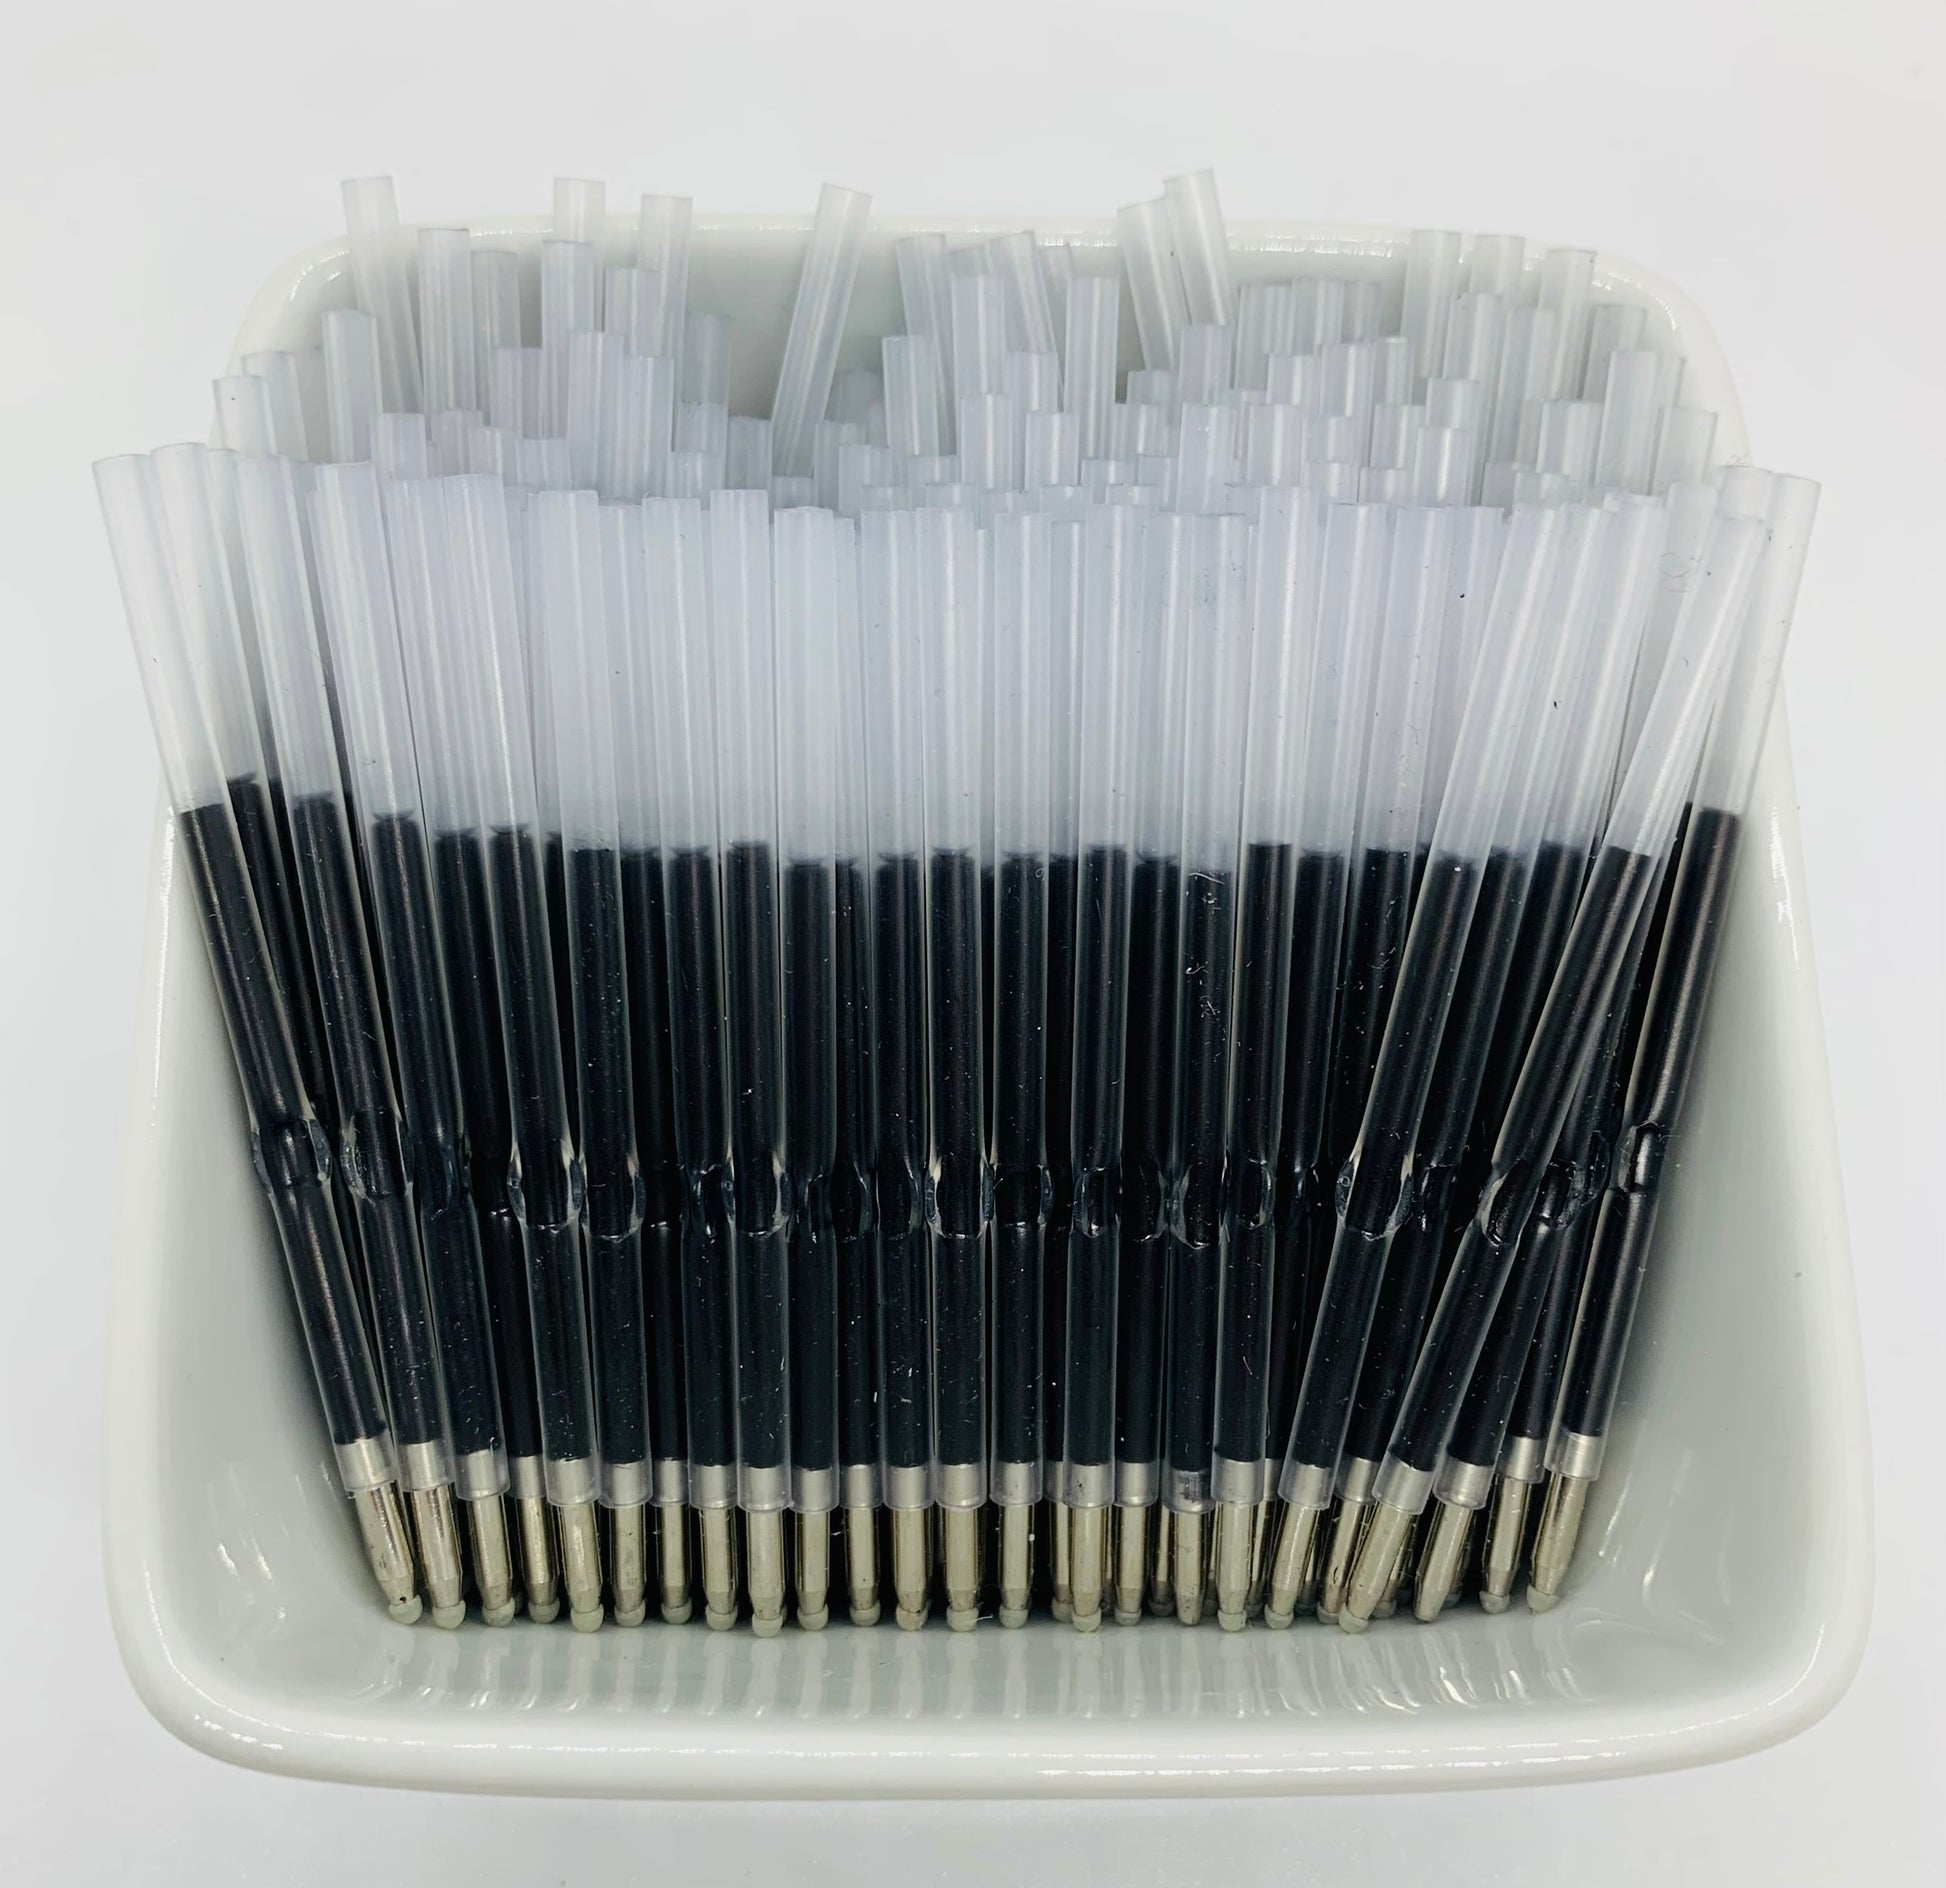 Paint Brush Retractable Pen REFILL Cartridge